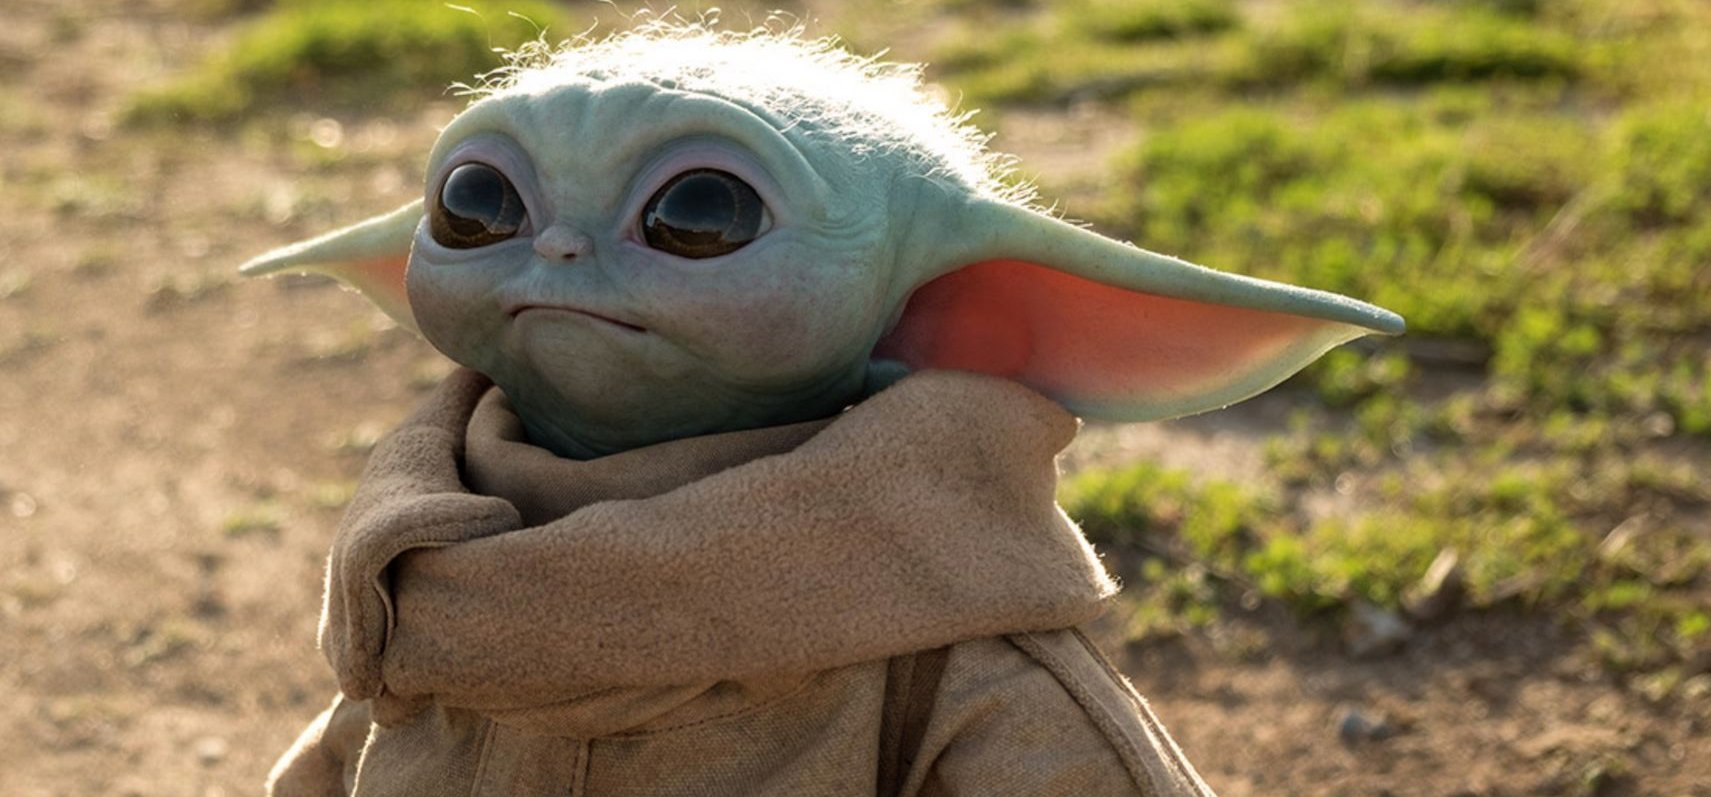 Baby Yoda teljesen kiakasztotta az embereket